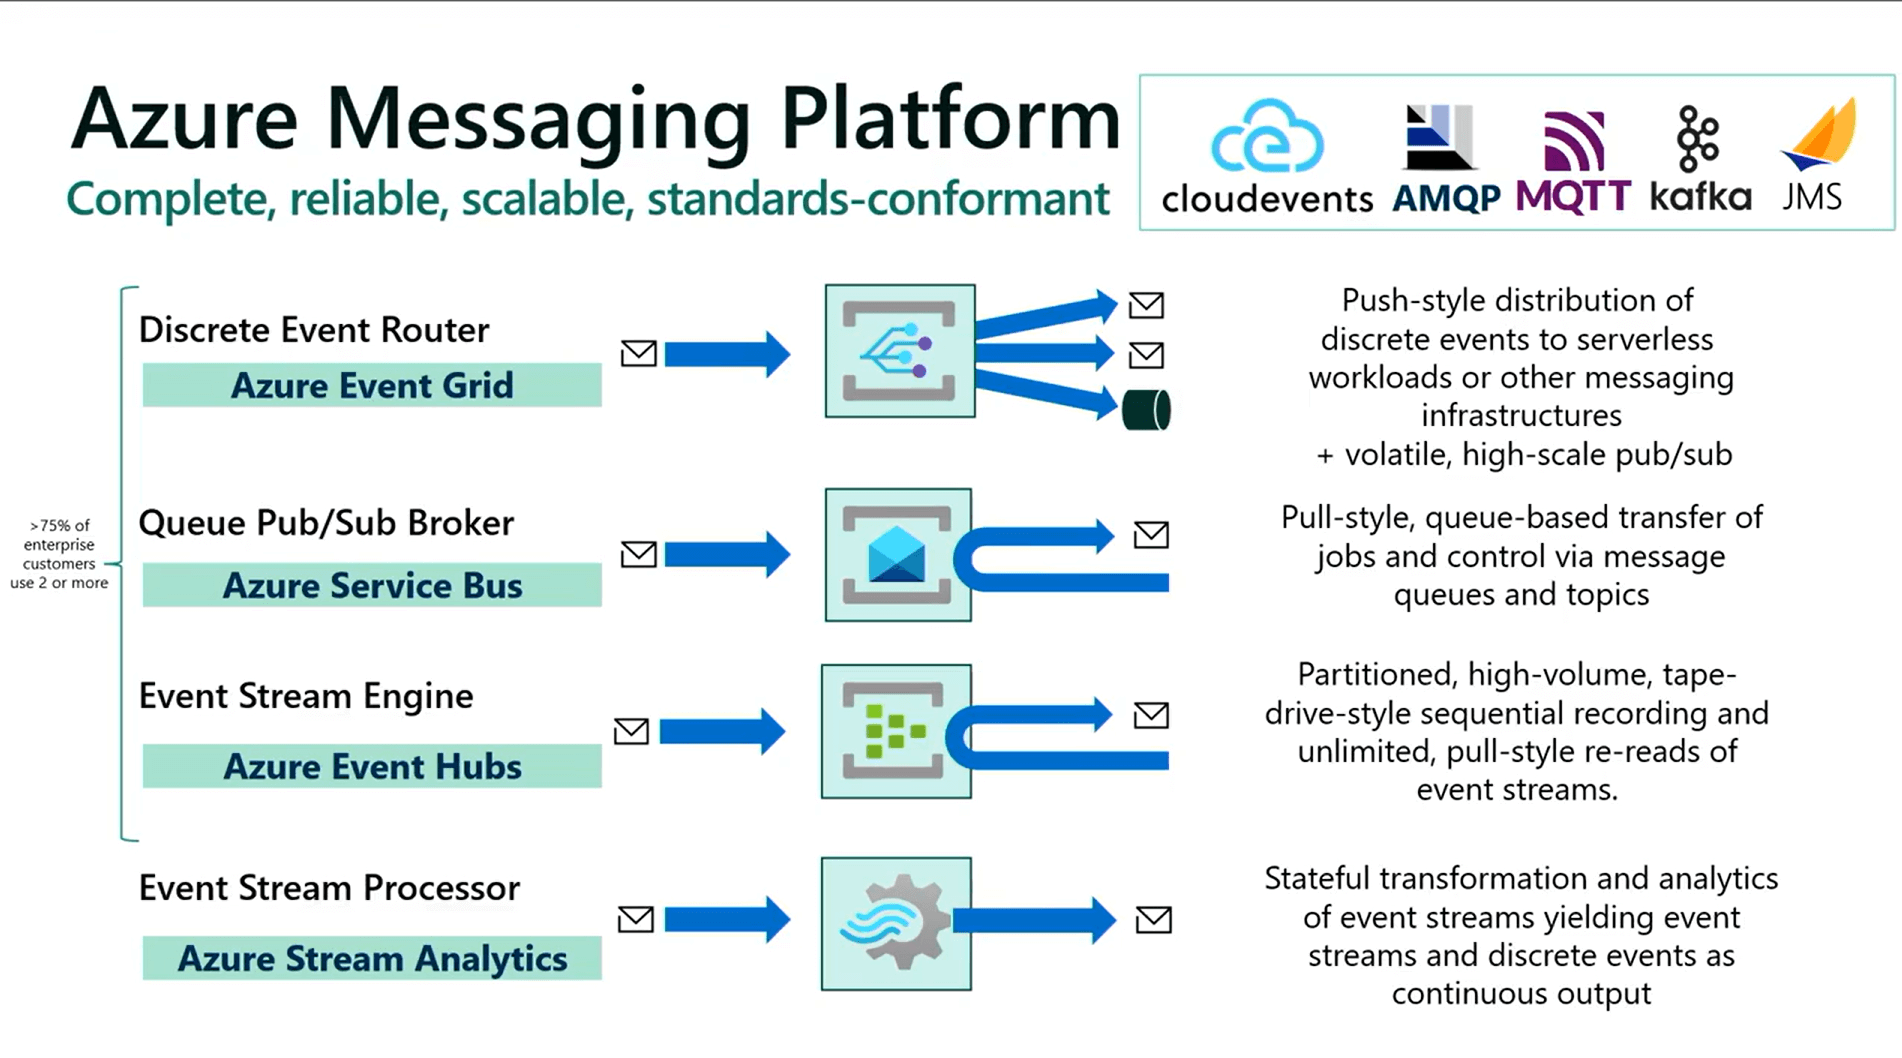 Azure messaging platform